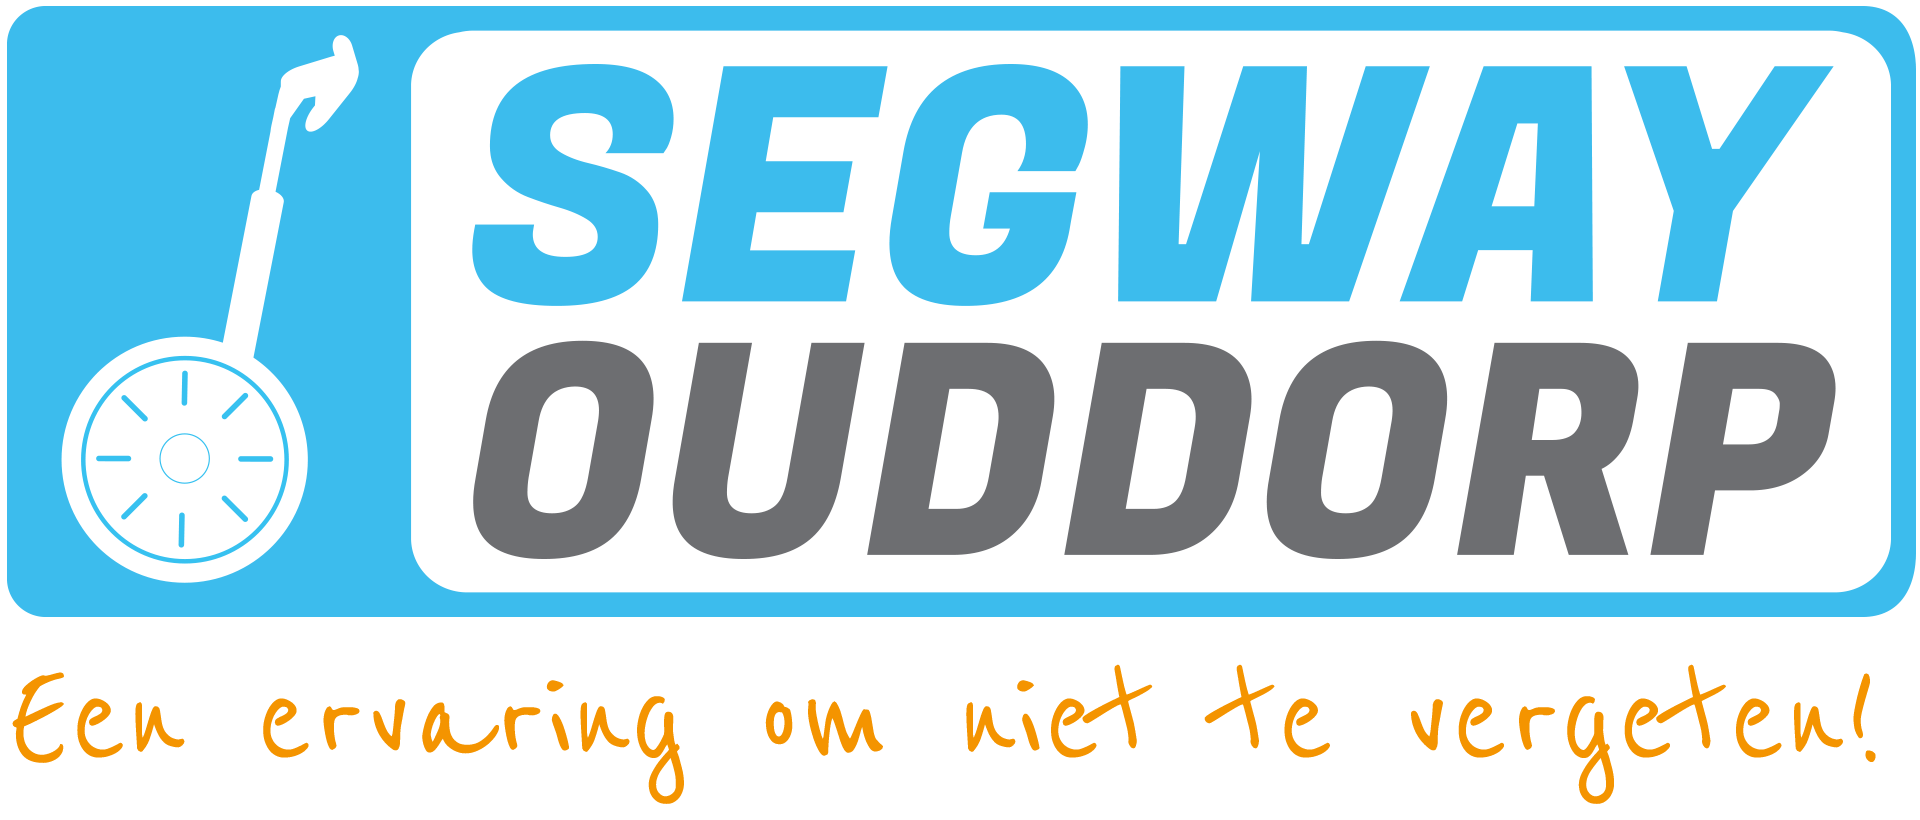 Segway Ouddorp